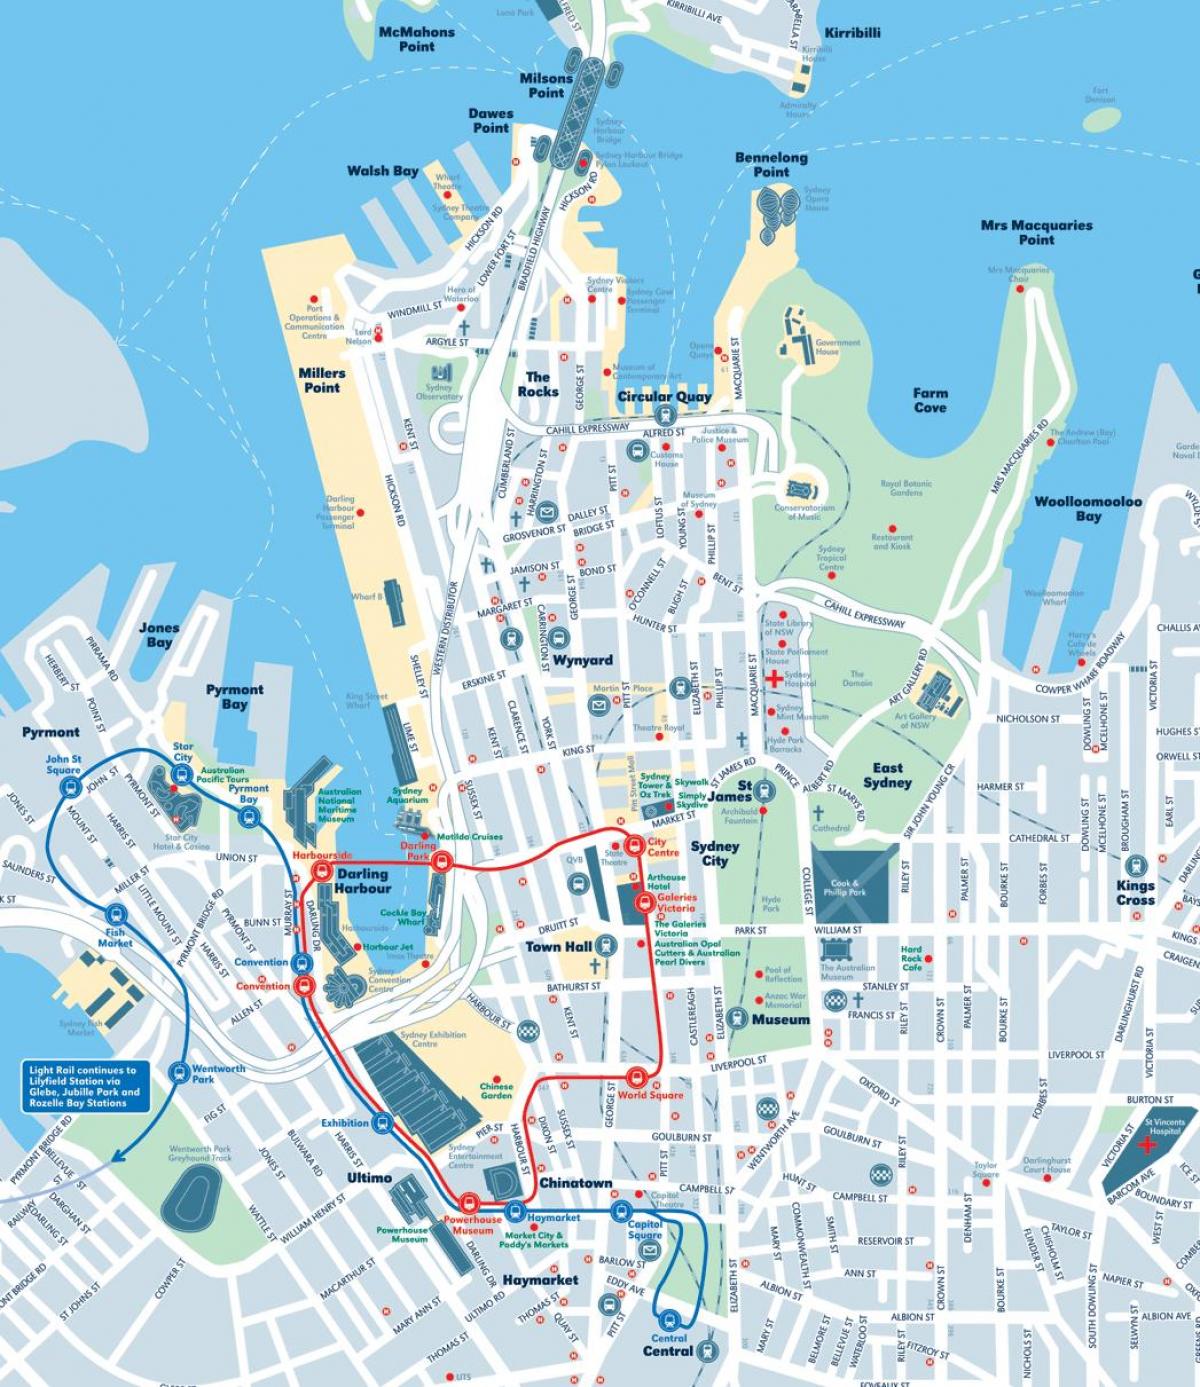 carte de la ville de sydney